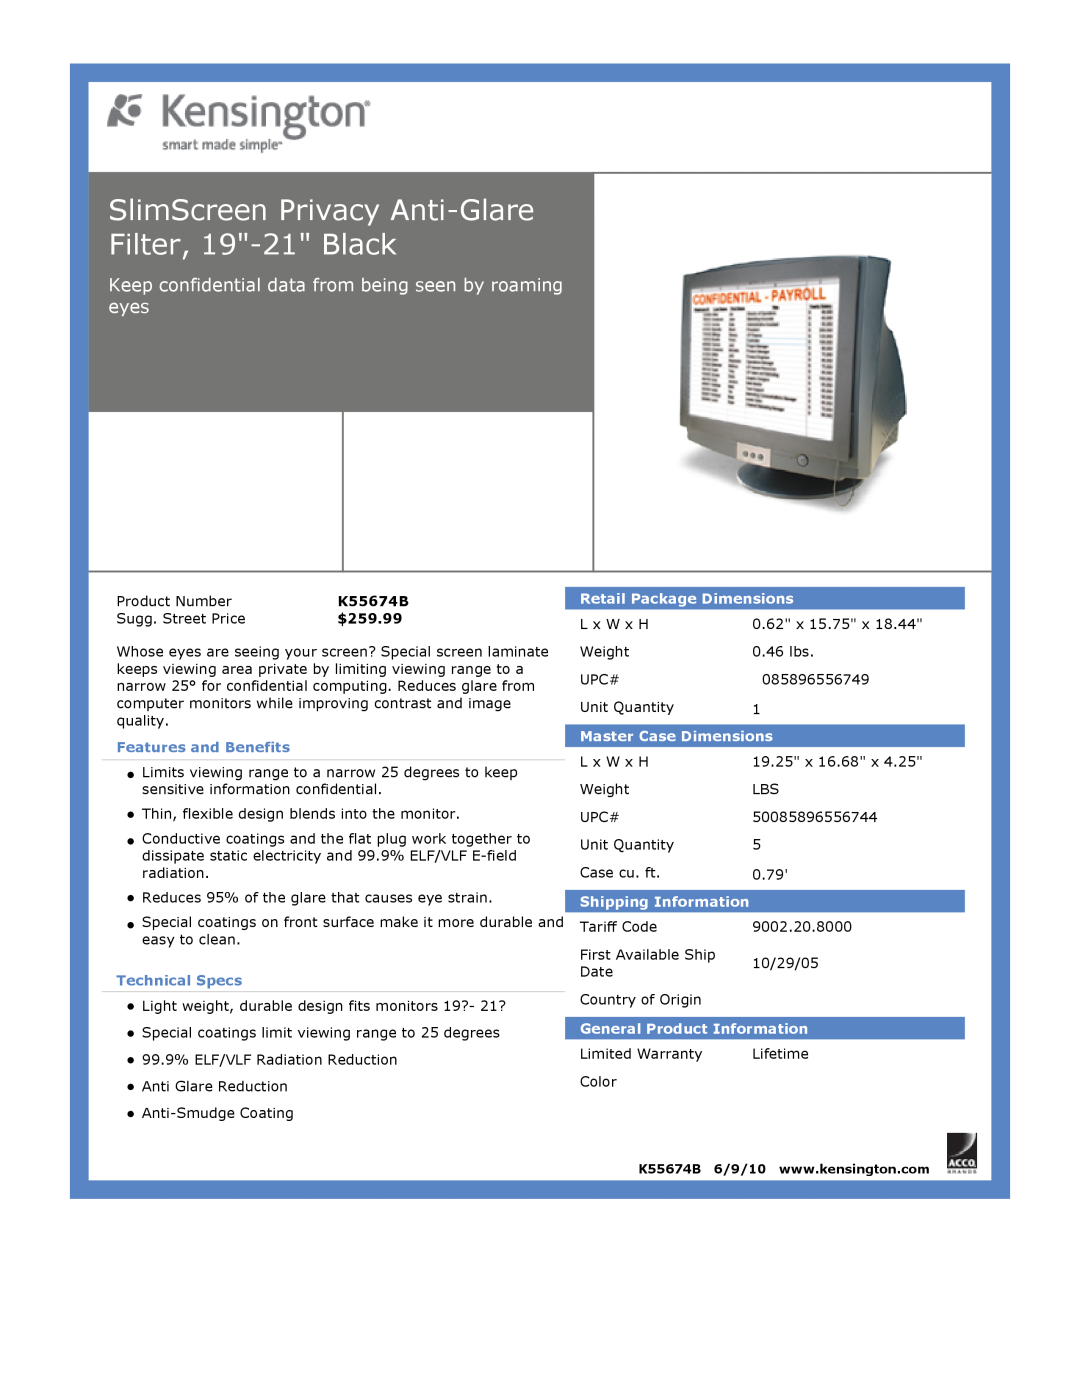 Kensington EU64325 SlimScreen Privacy Anti-GlareFilter, 19-21Black, $259.99, Features and Benefits, Technical Specs 